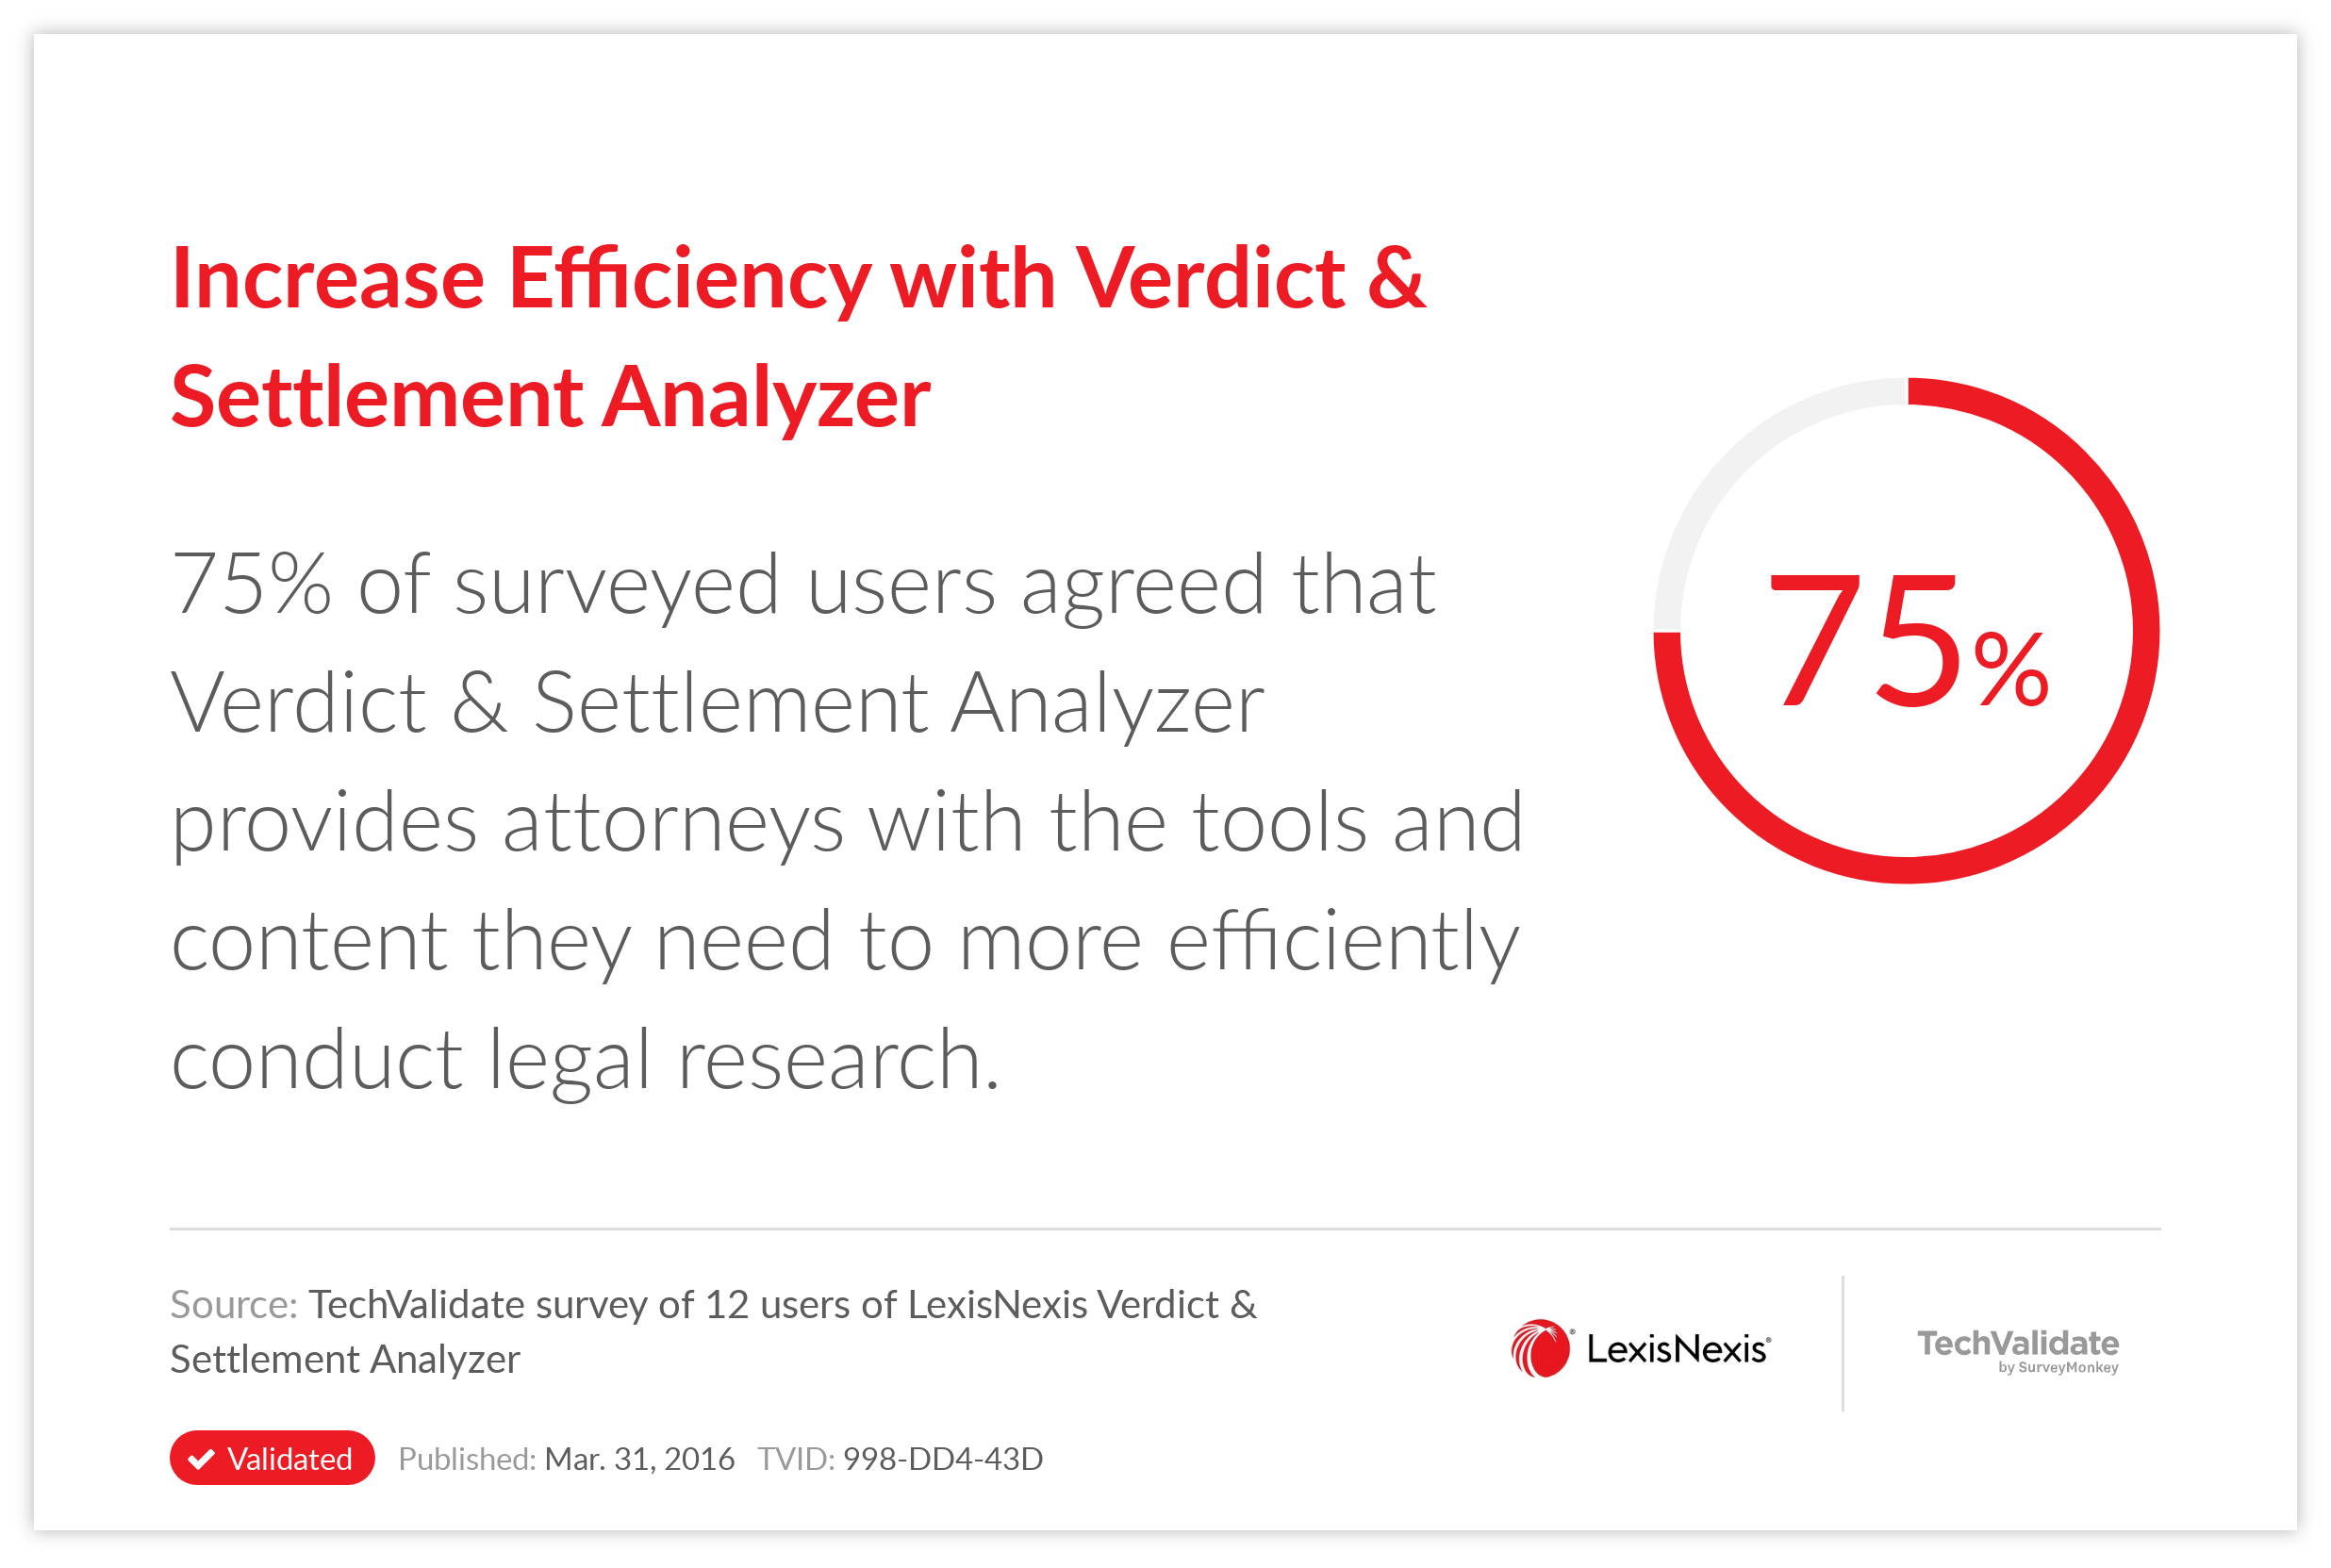 Increase Efficiency with Verdict & Settlement Analyzer